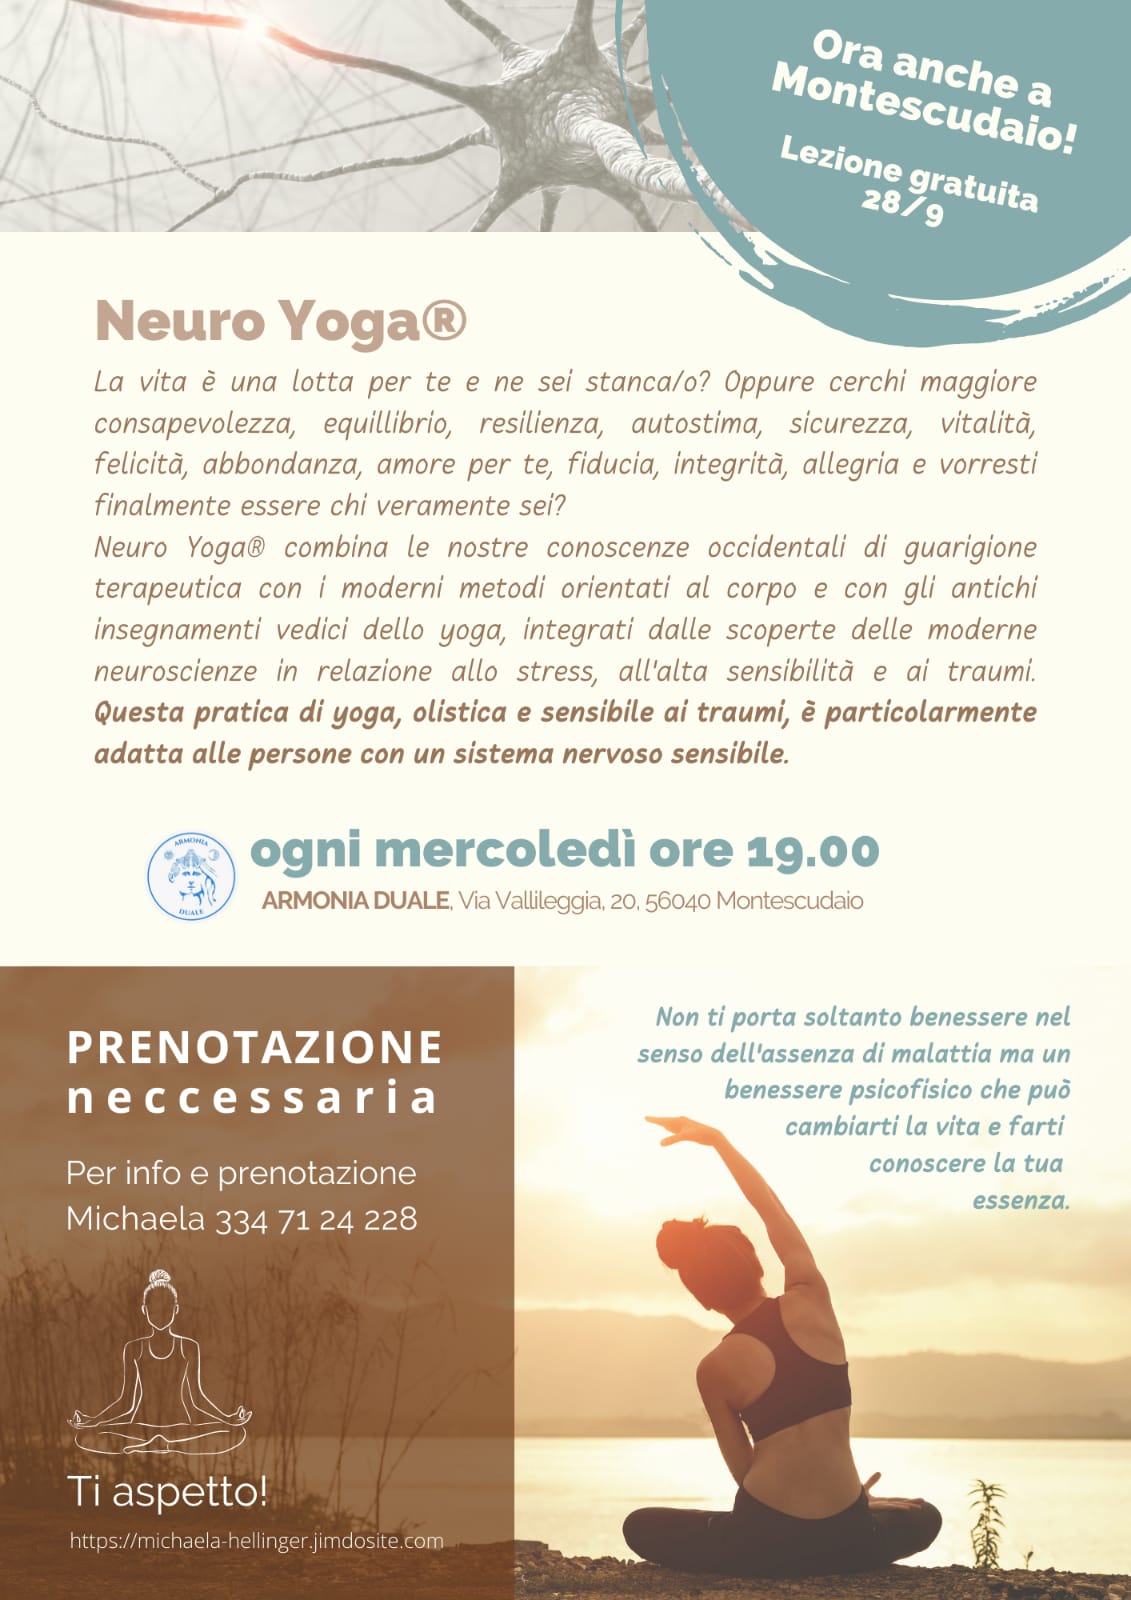 Neuro Yoga